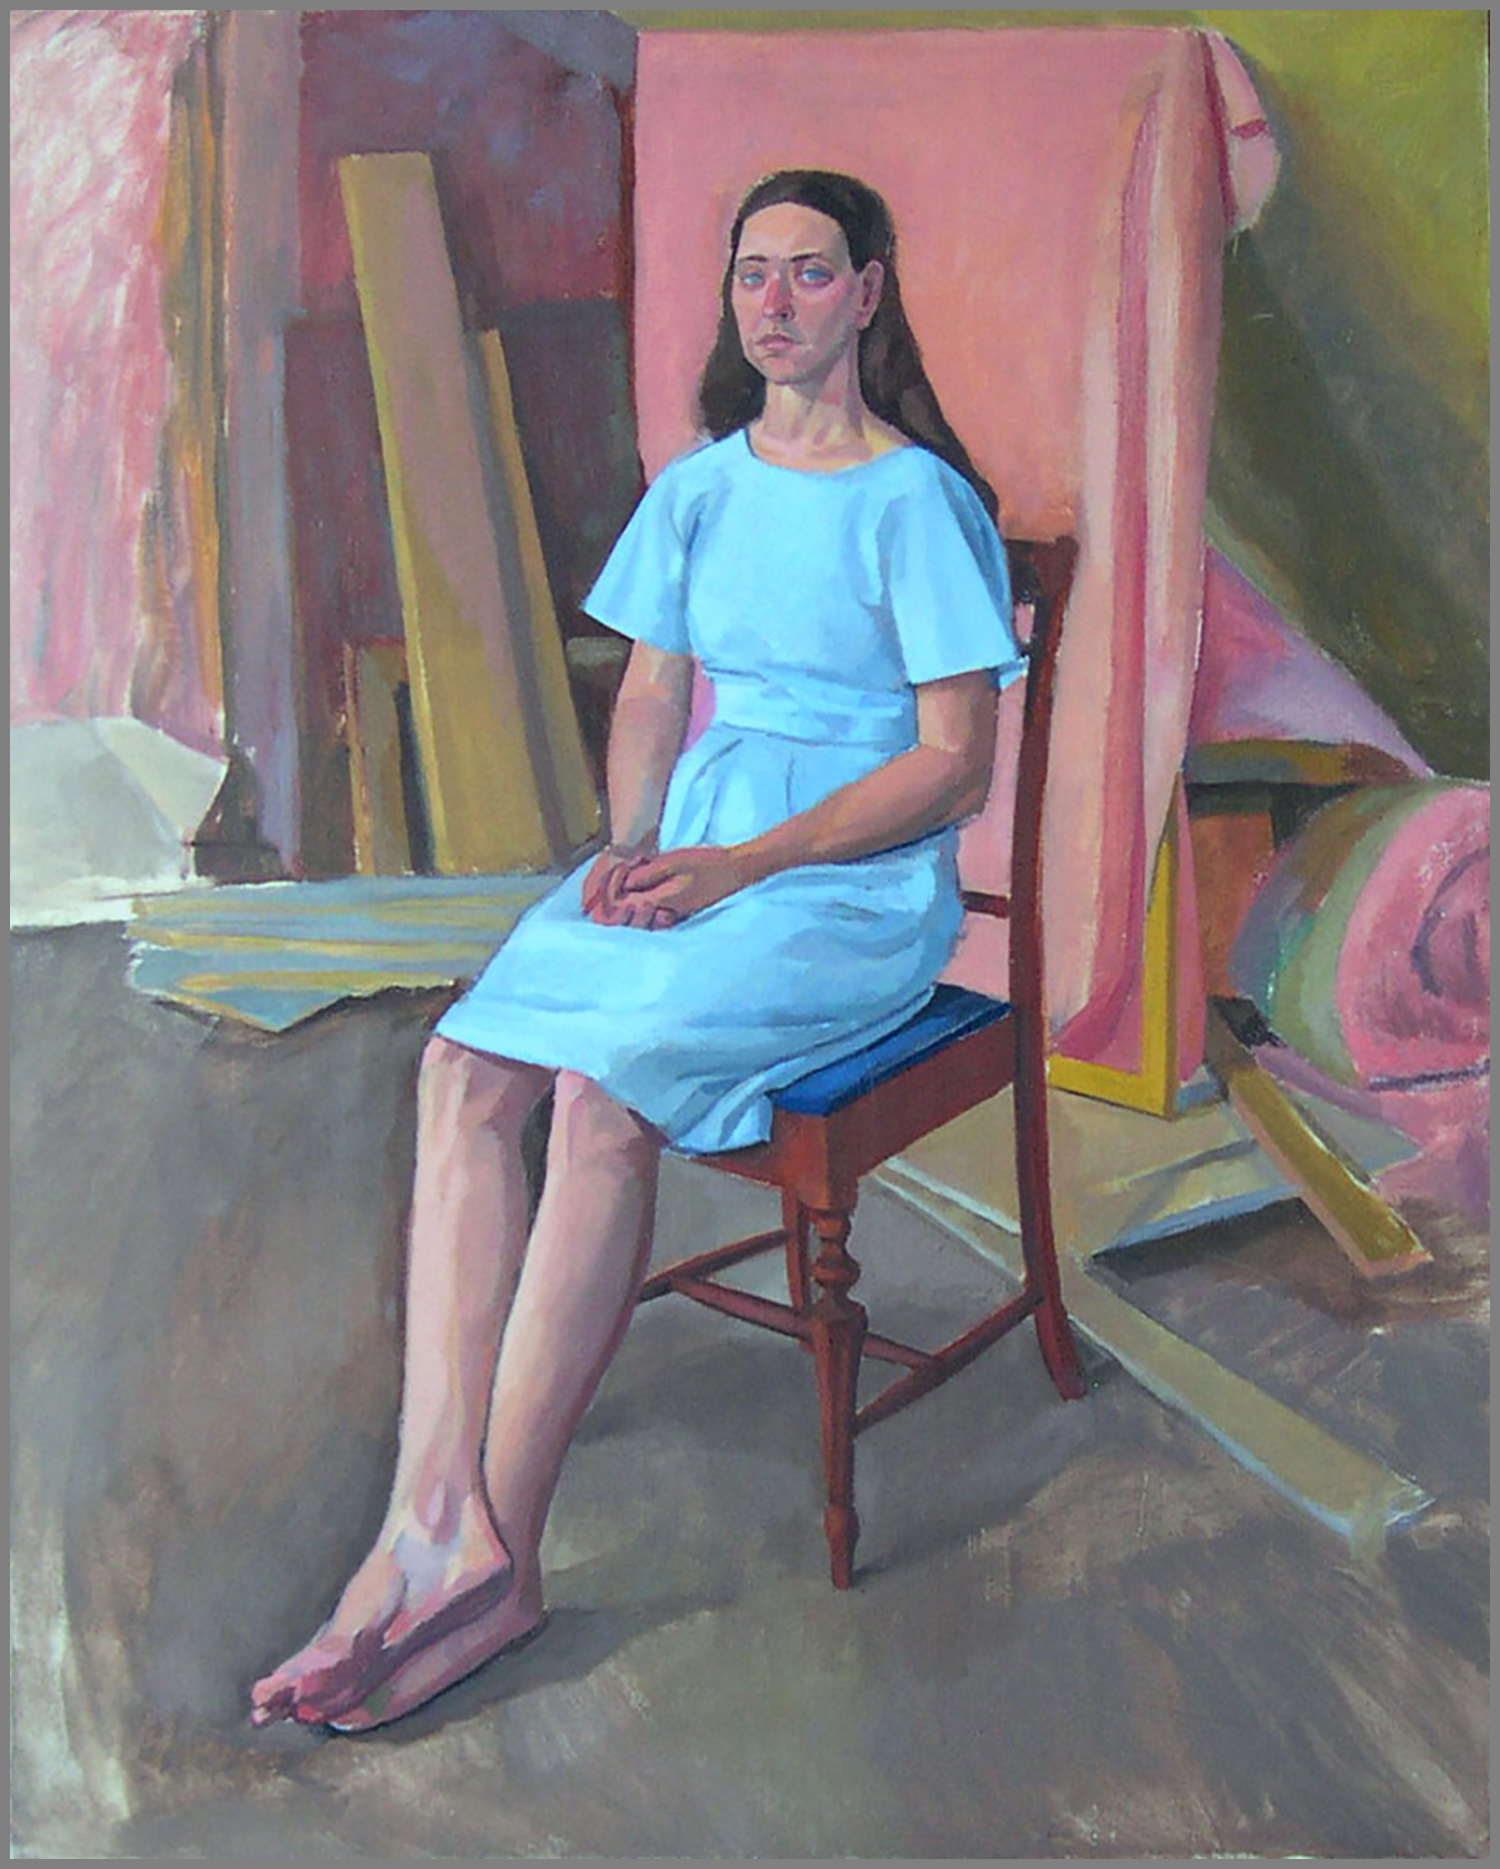  Charlotte in the Studio, oil/canvas, 28 x 22 inches 